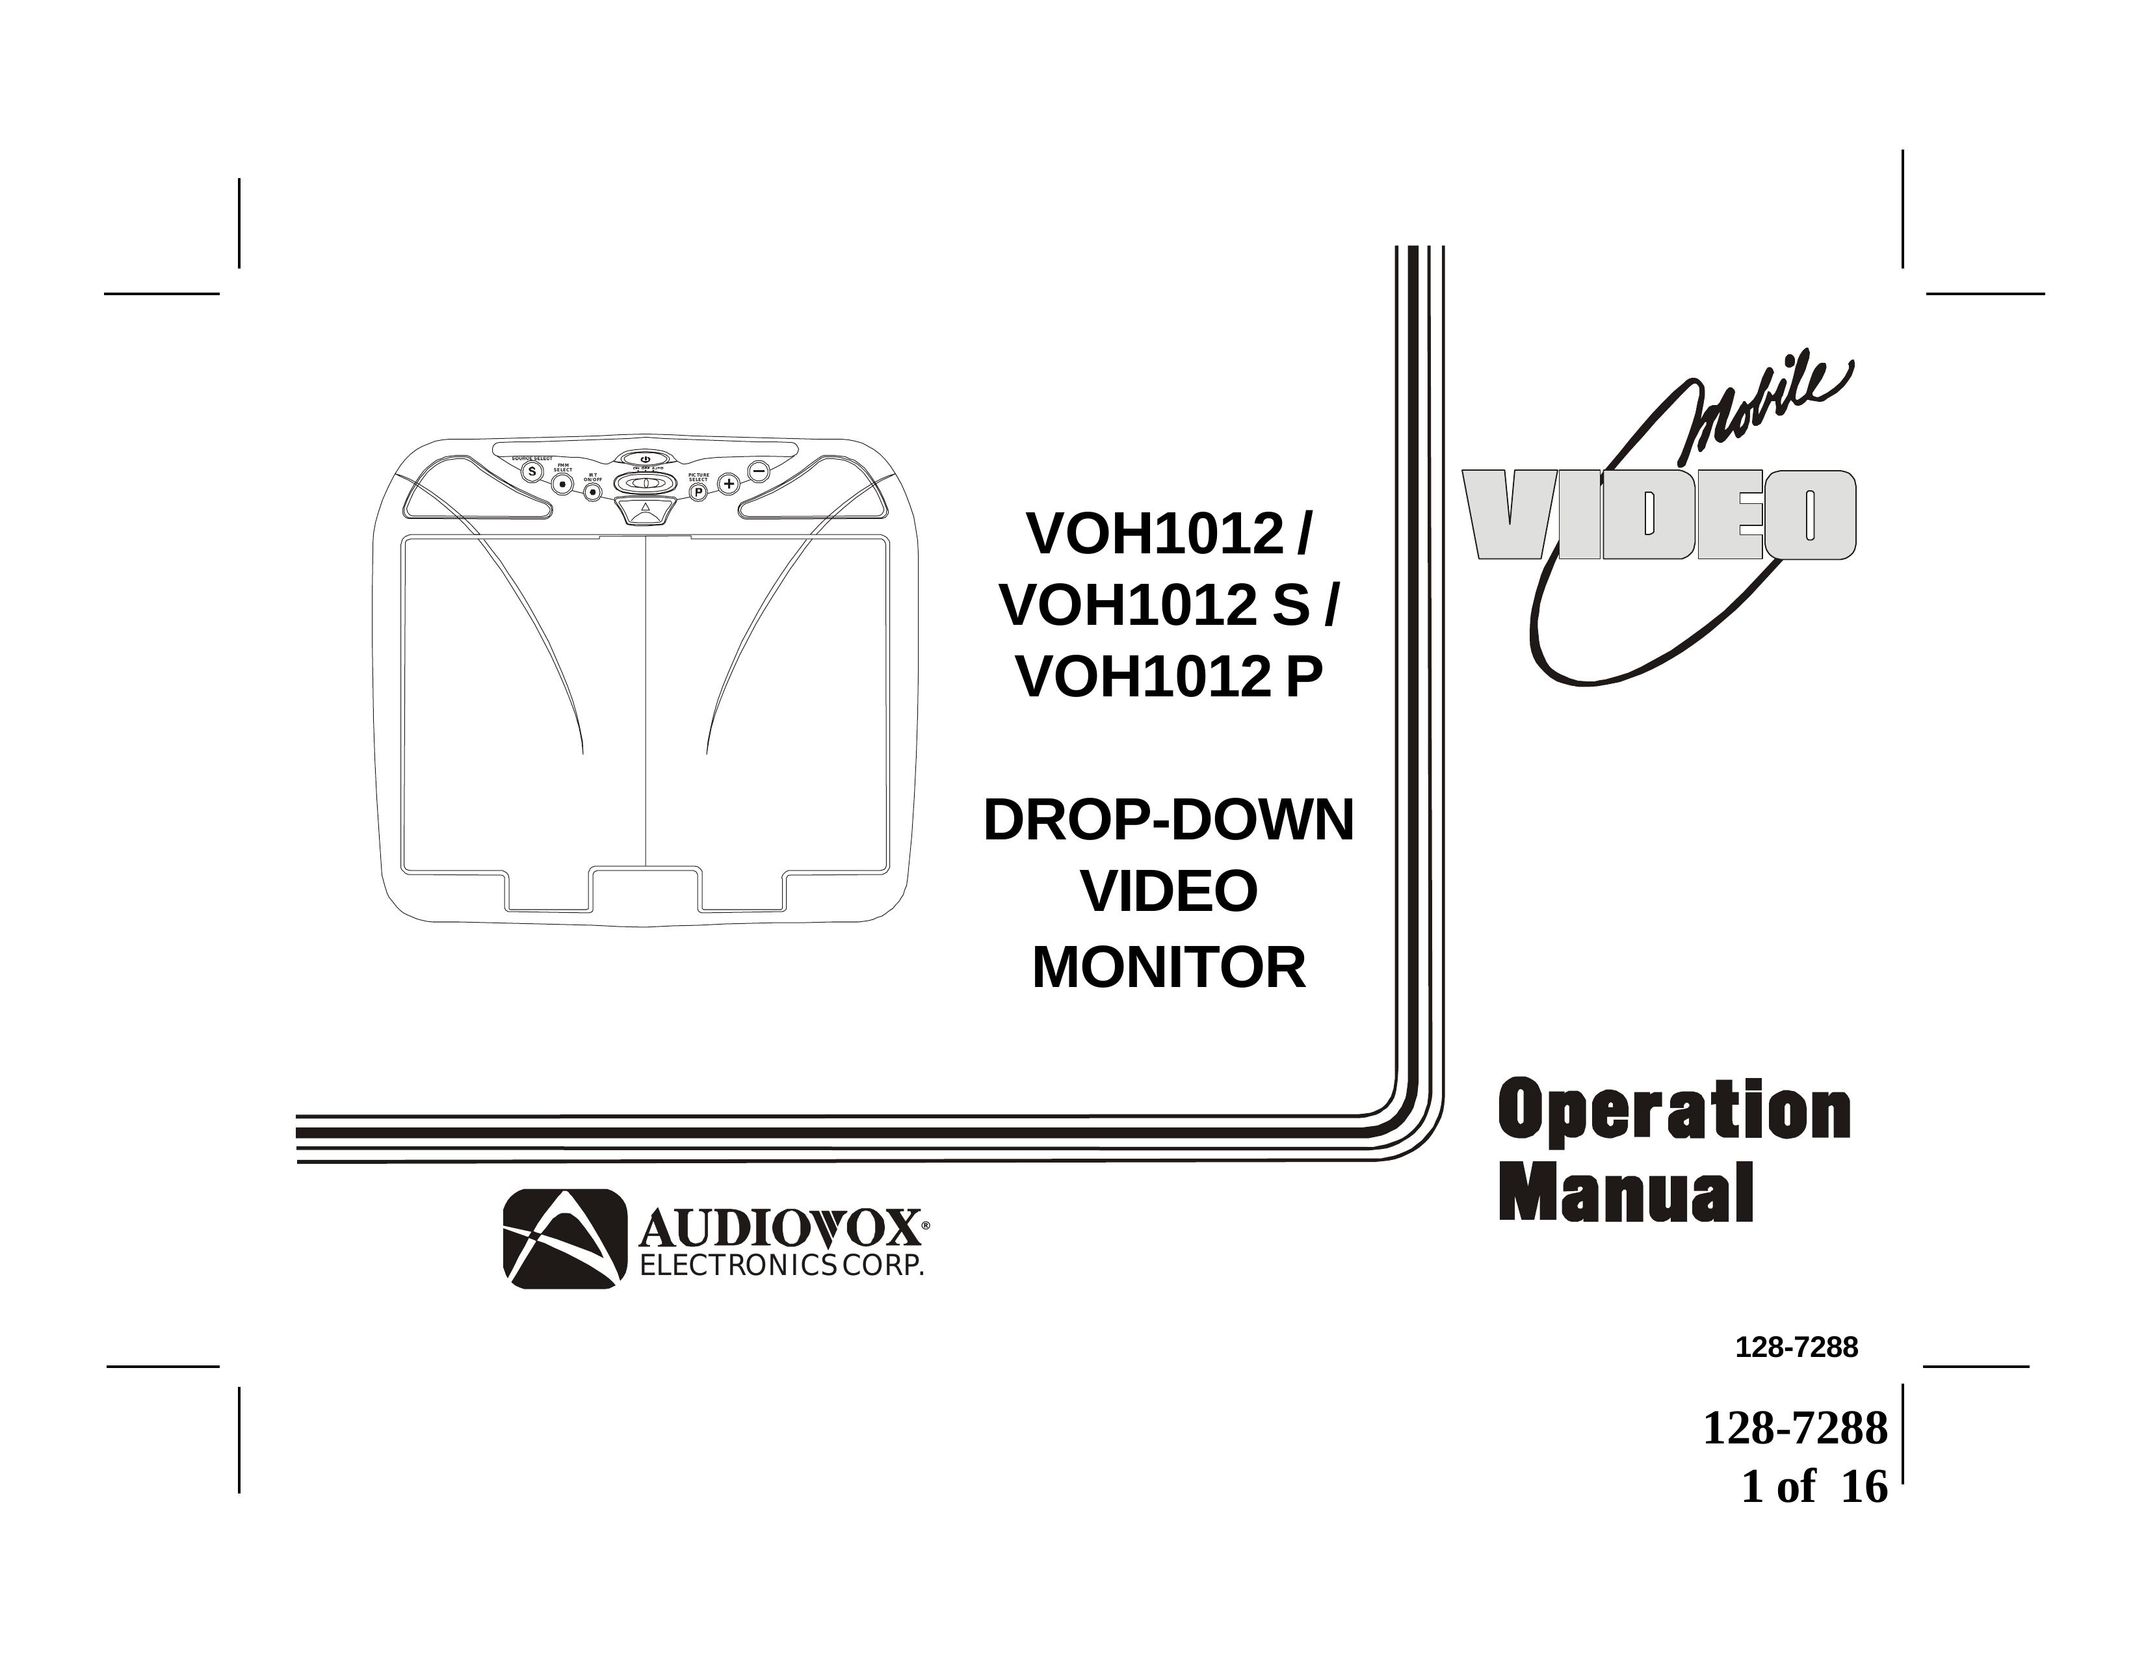 Audiovox VOH1012 Computer Monitor User Manual